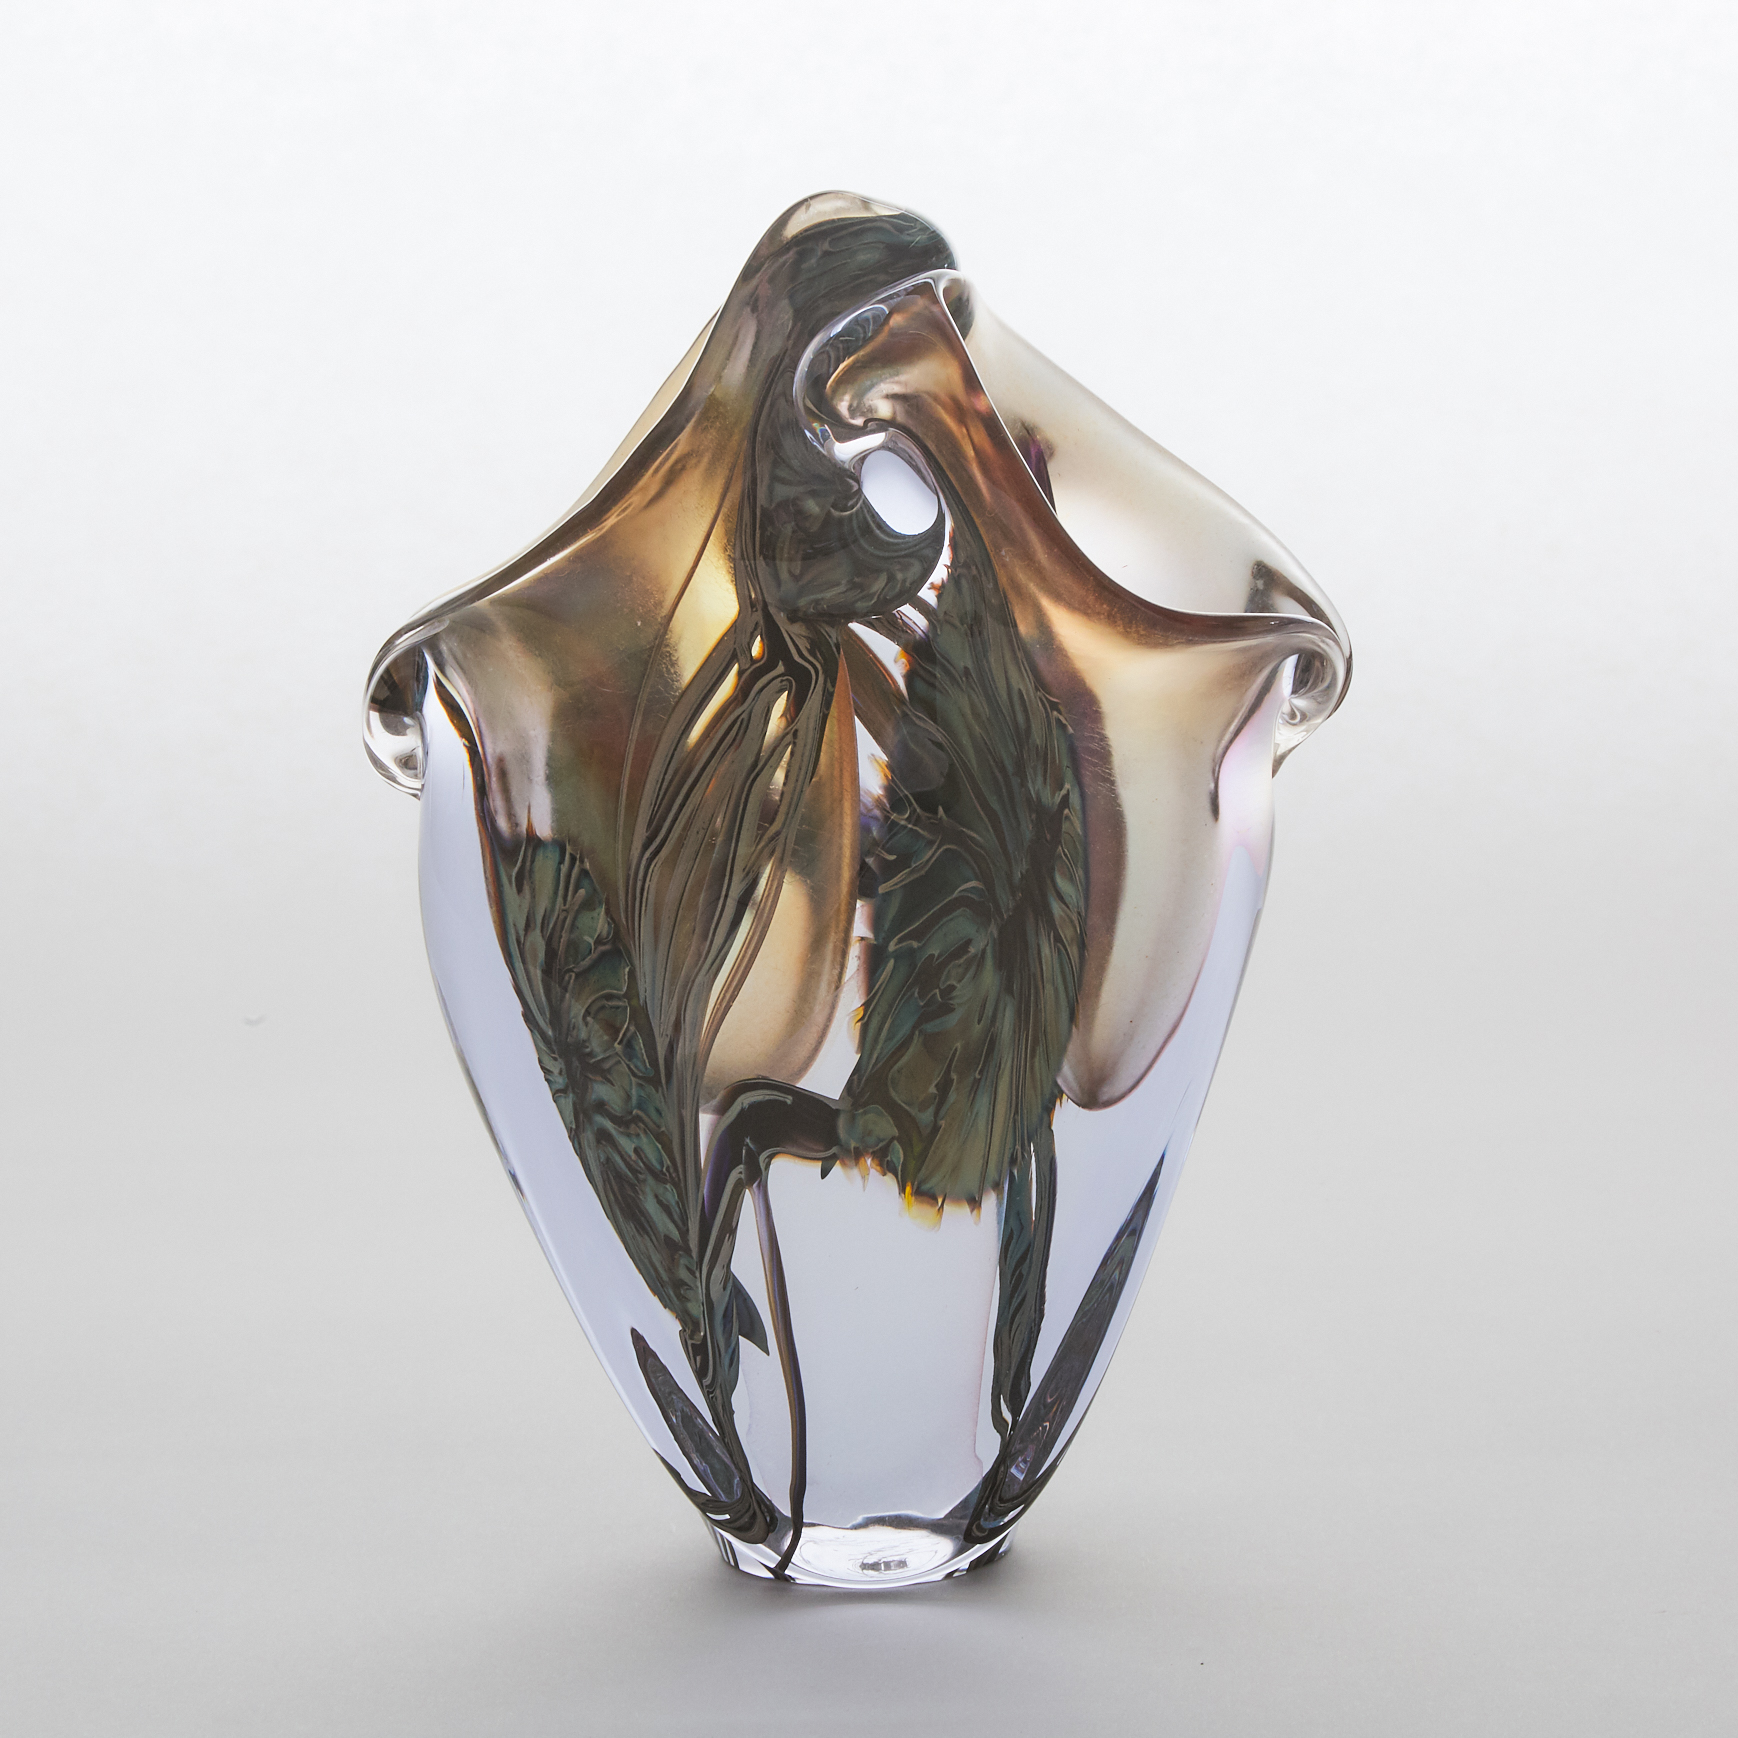 David Lotton (American, b.1960), Glass Sculpture, 1995